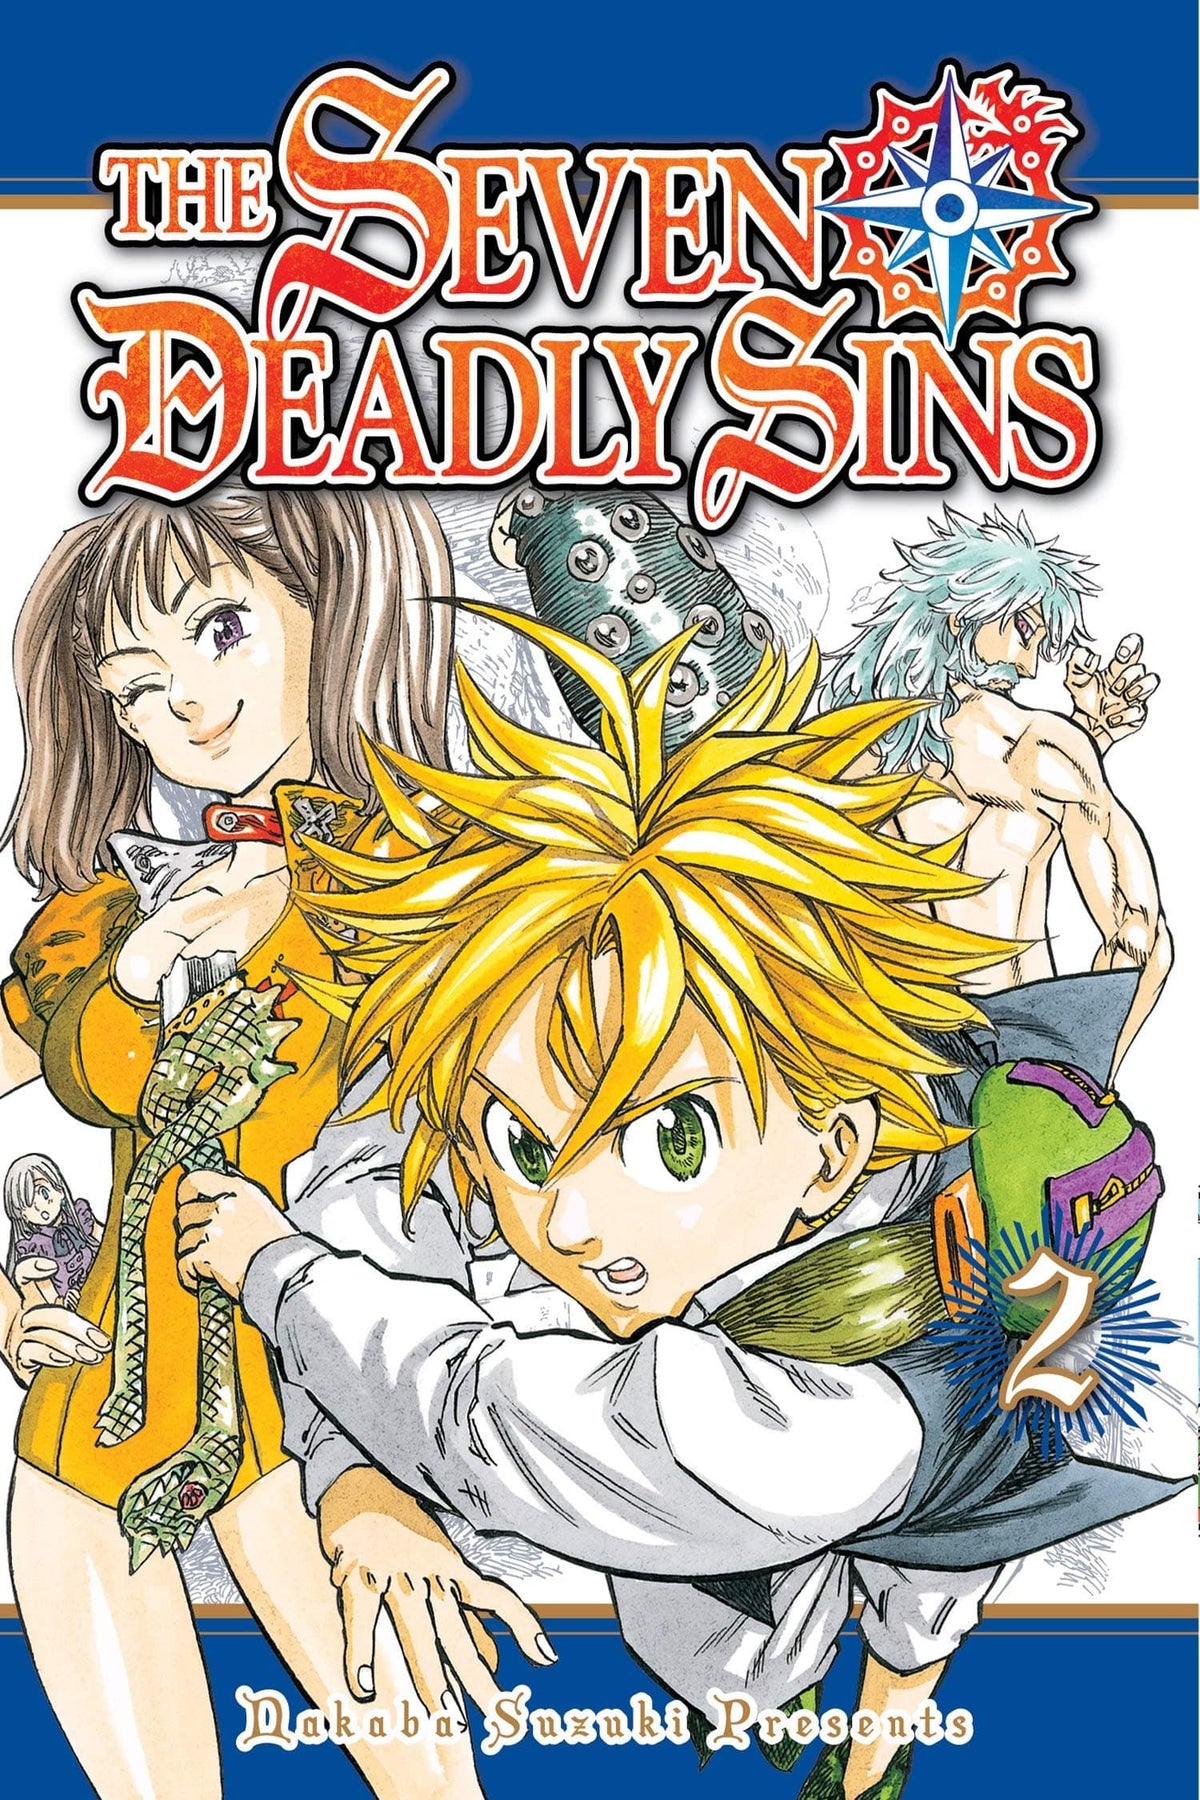 Seven Deadly Sins Vol. 2 - Third Eye